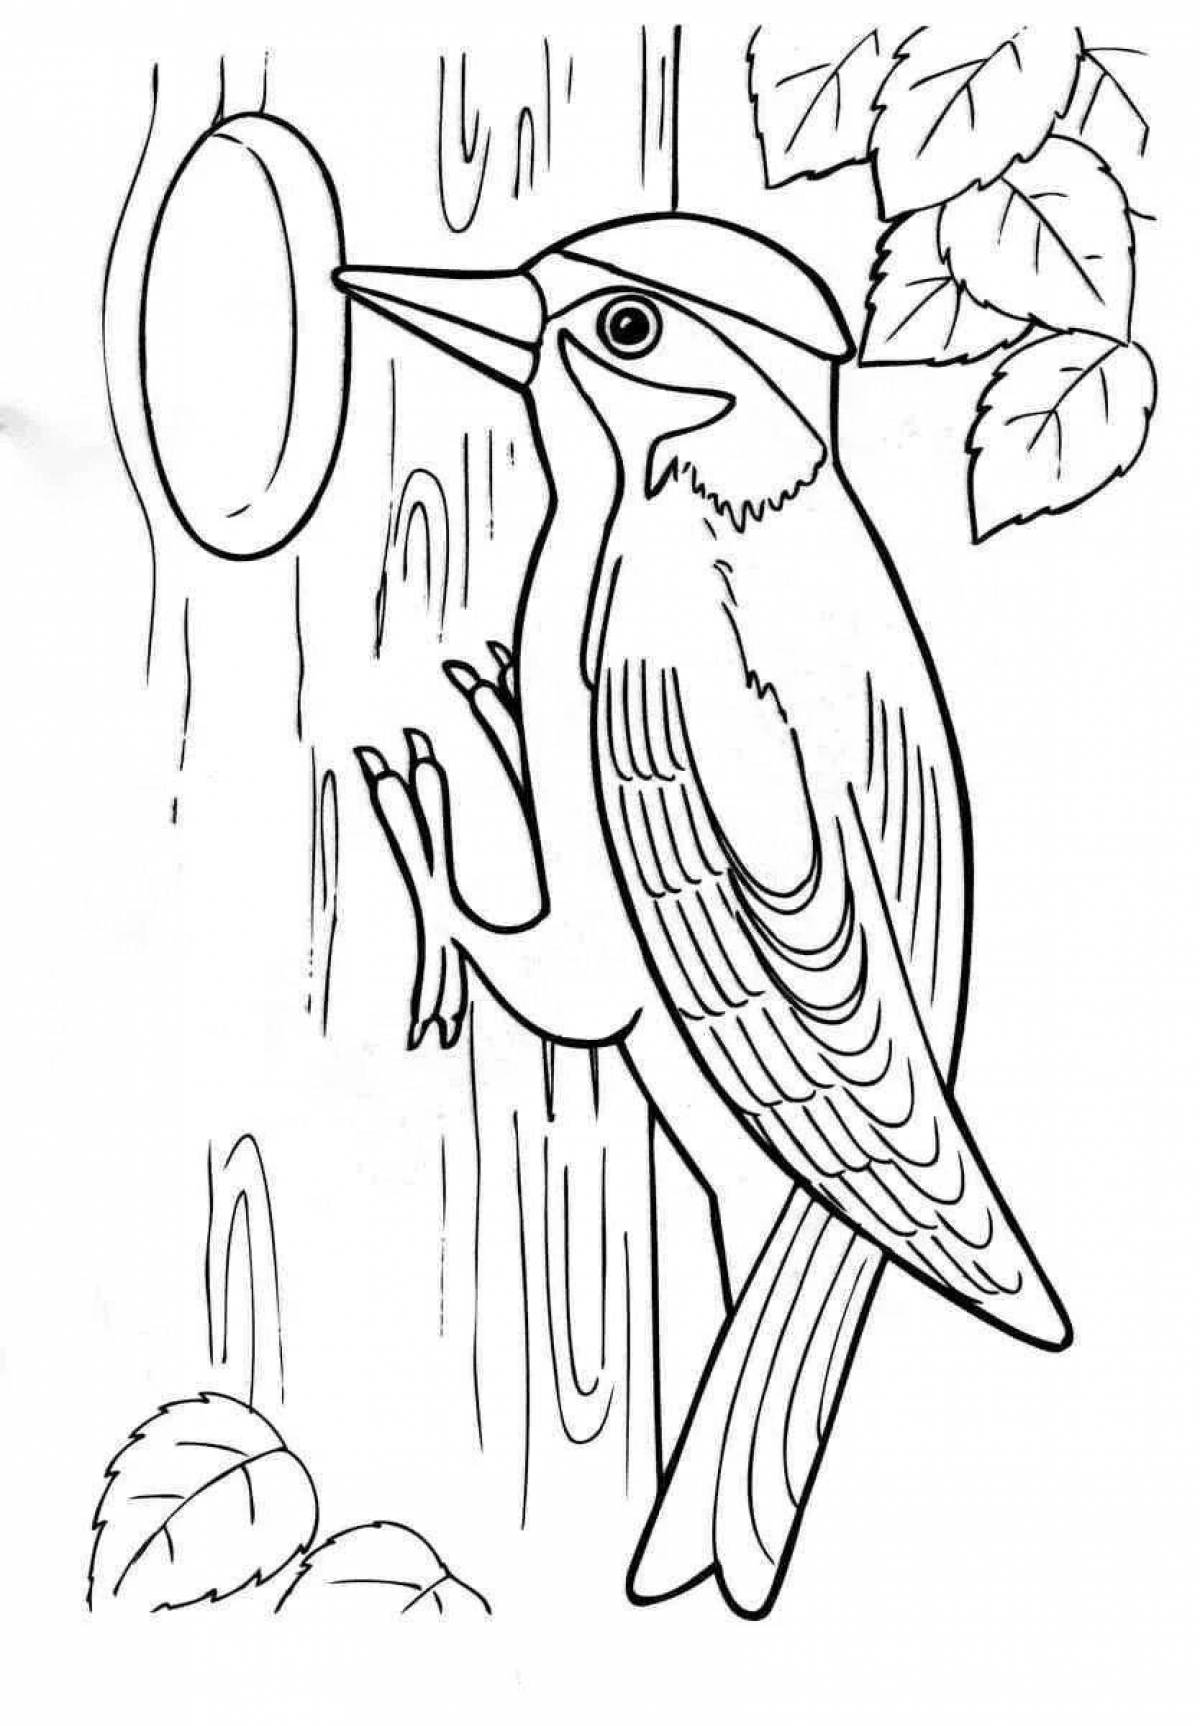 Coloring book shiny woodpecker